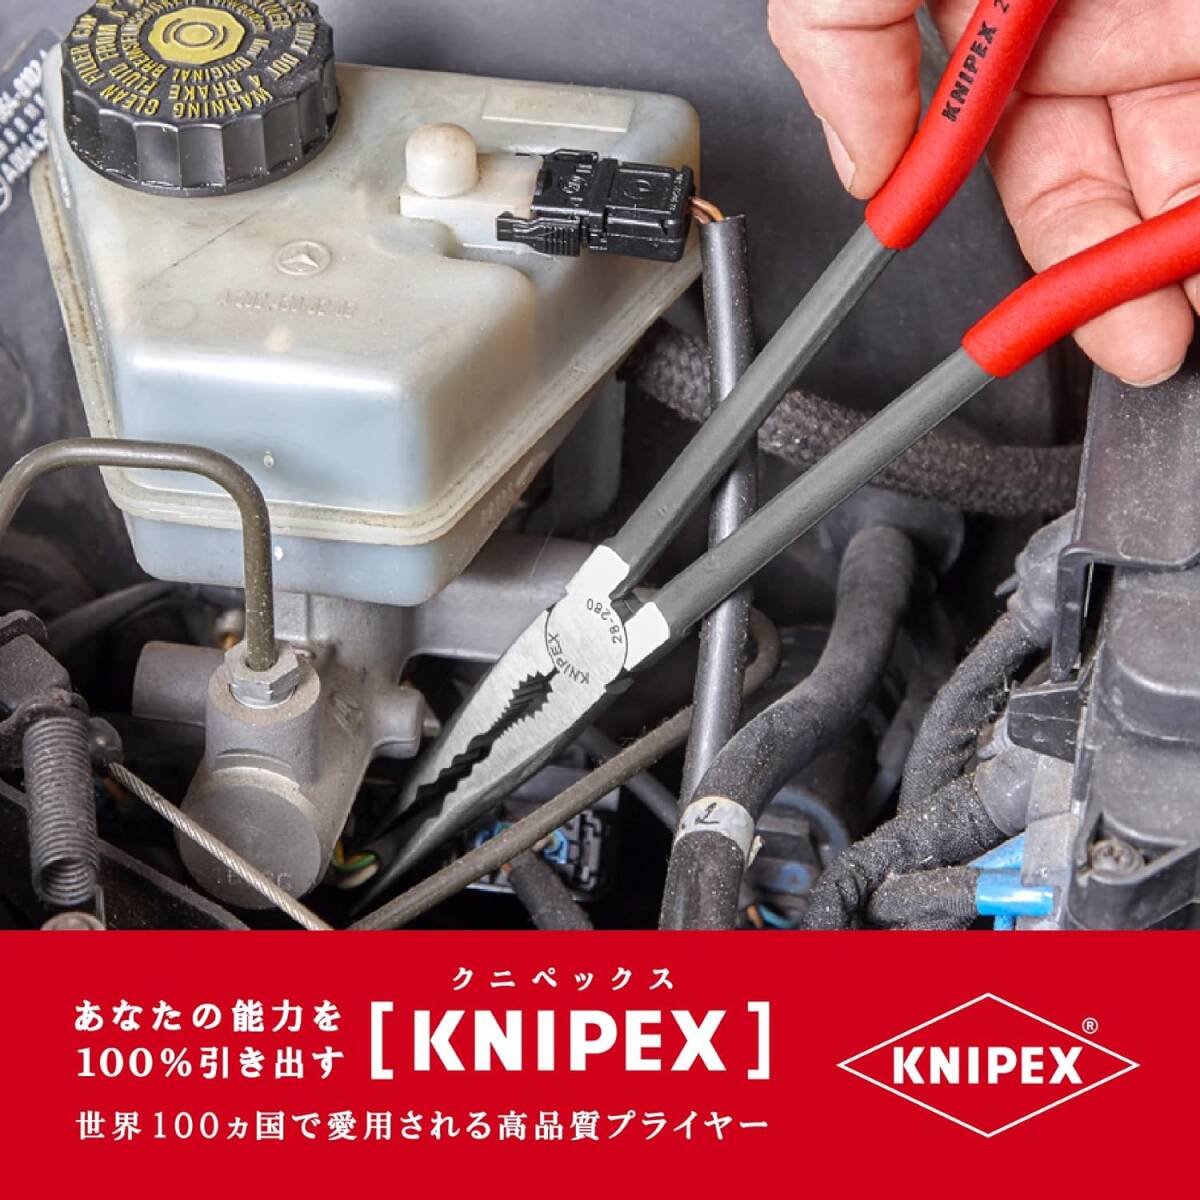 KNIPEX 2871 280 (knipeks) в сборе плоскогубцы 